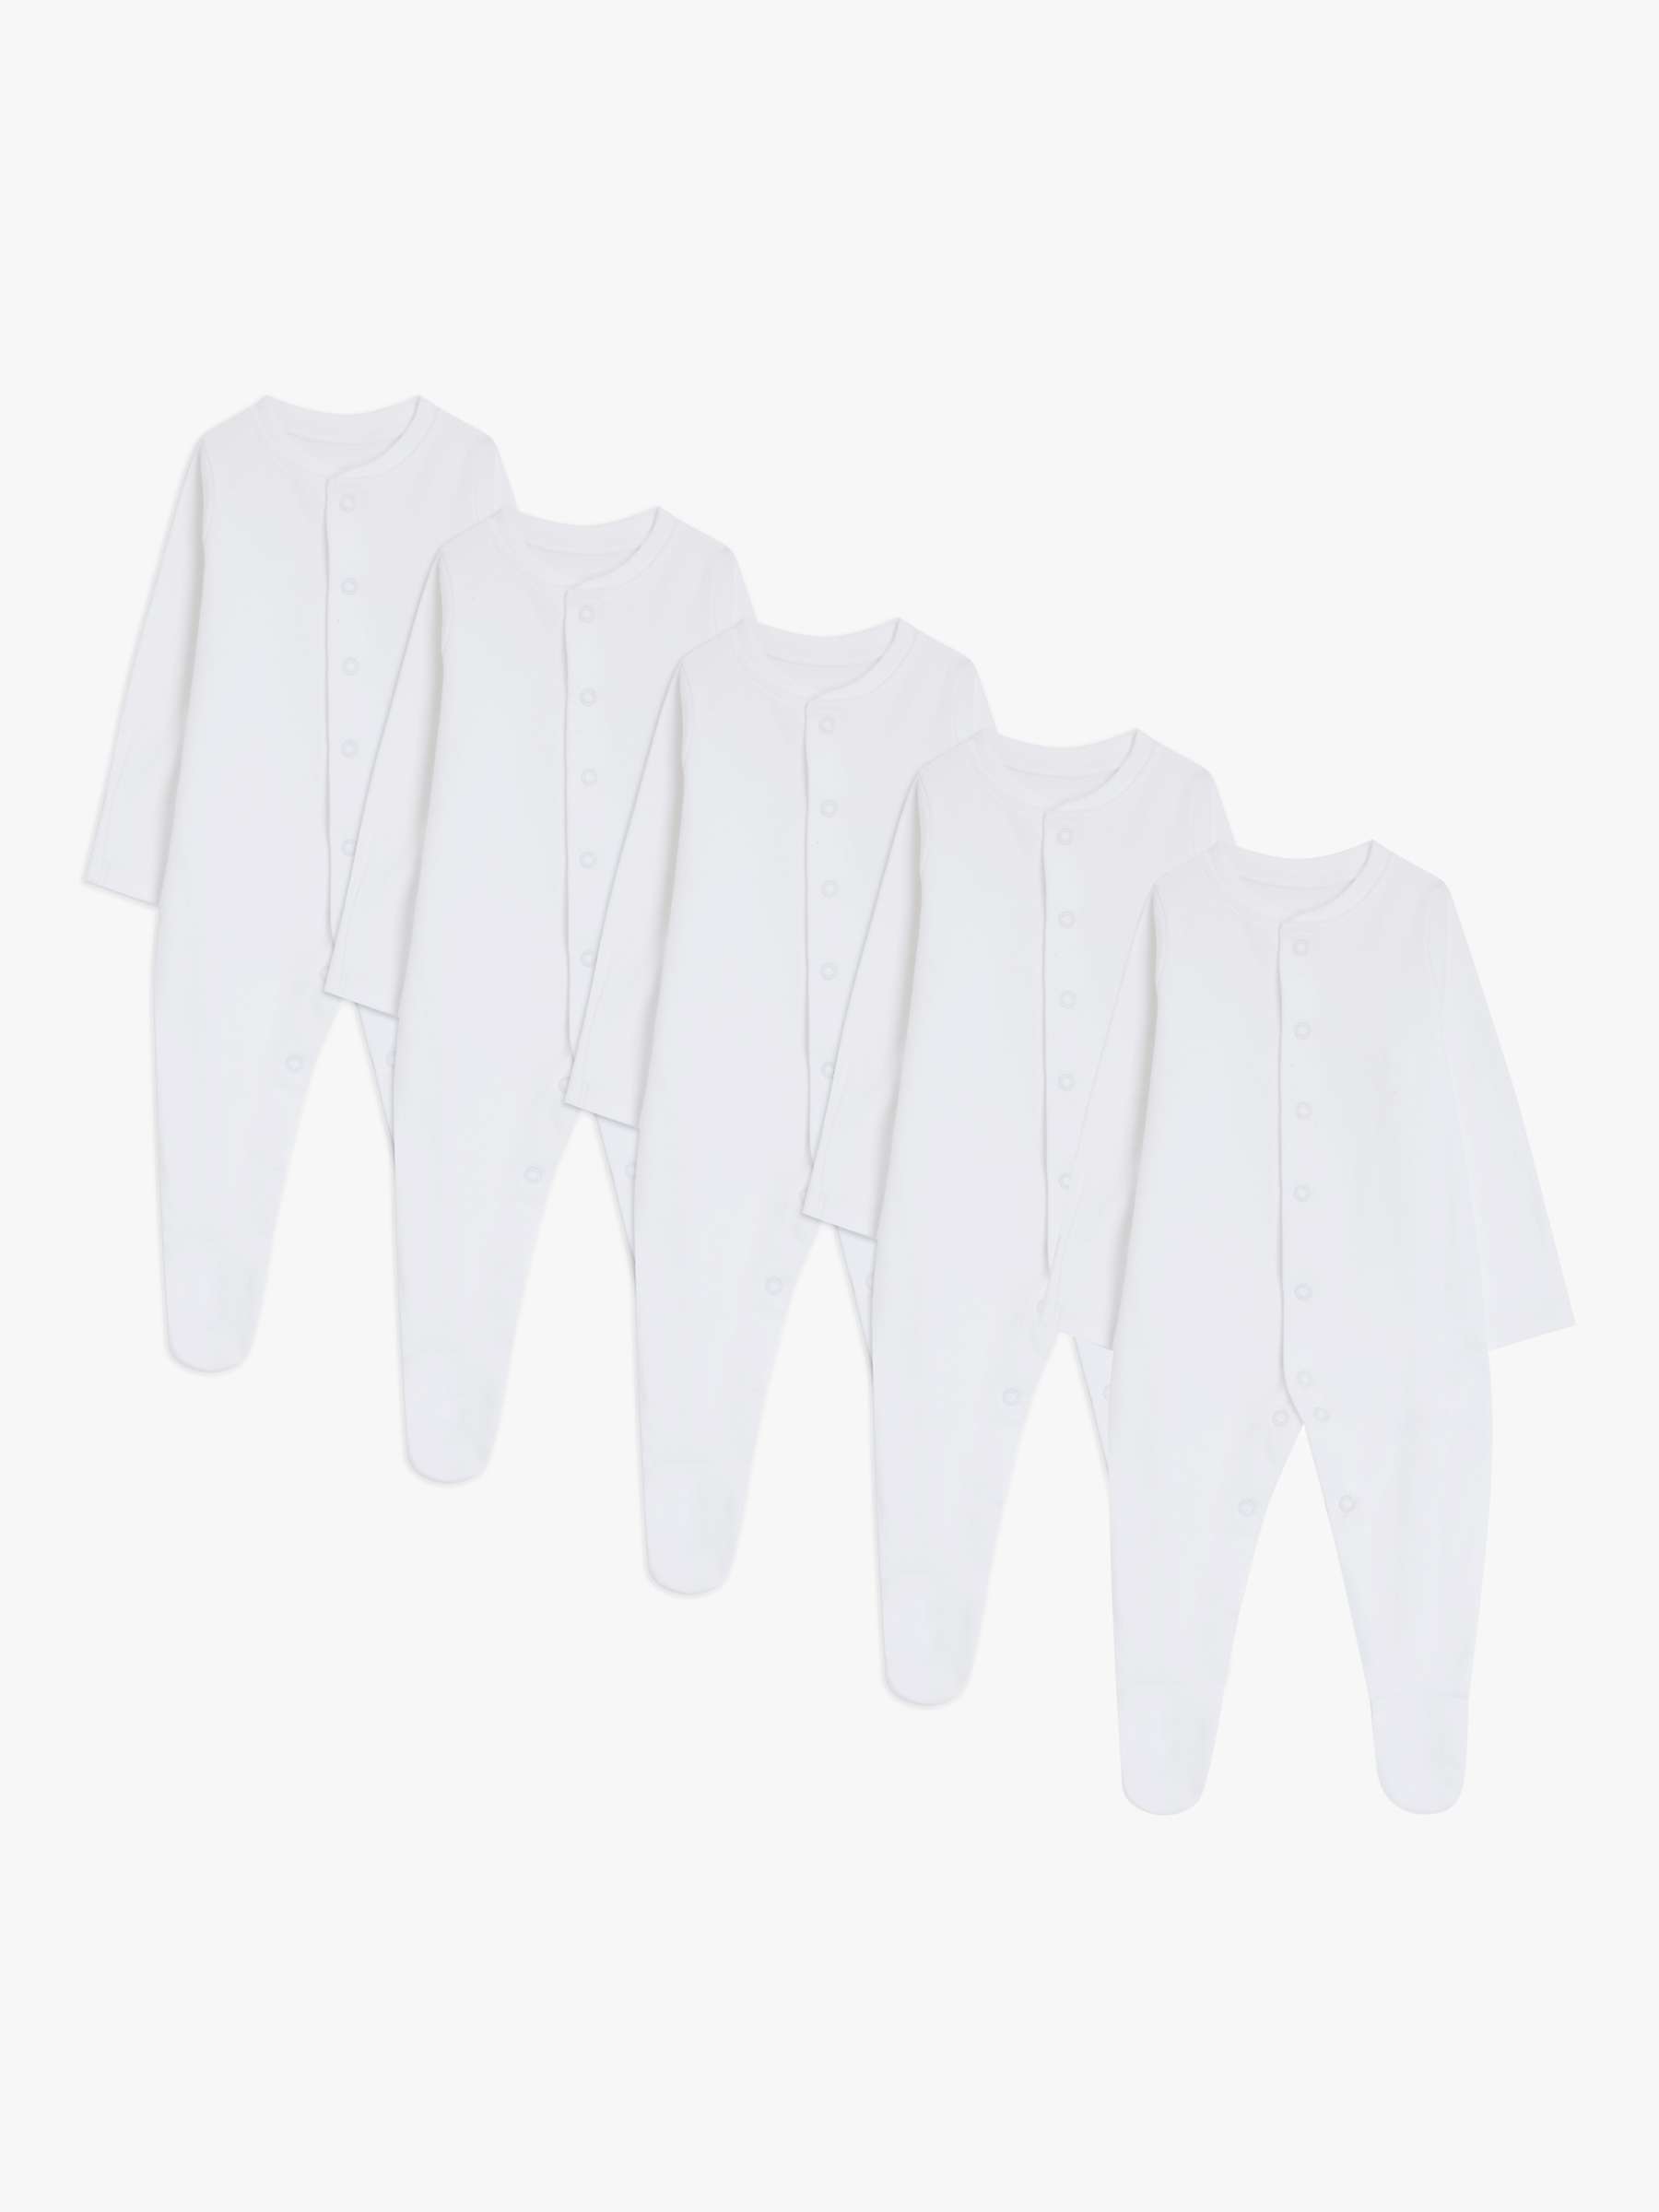 Buy John Lewis Baby GOTS Organic Cotton Long Sleeve Sleepsuit, Pack of 5, White Online at johnlewis.com